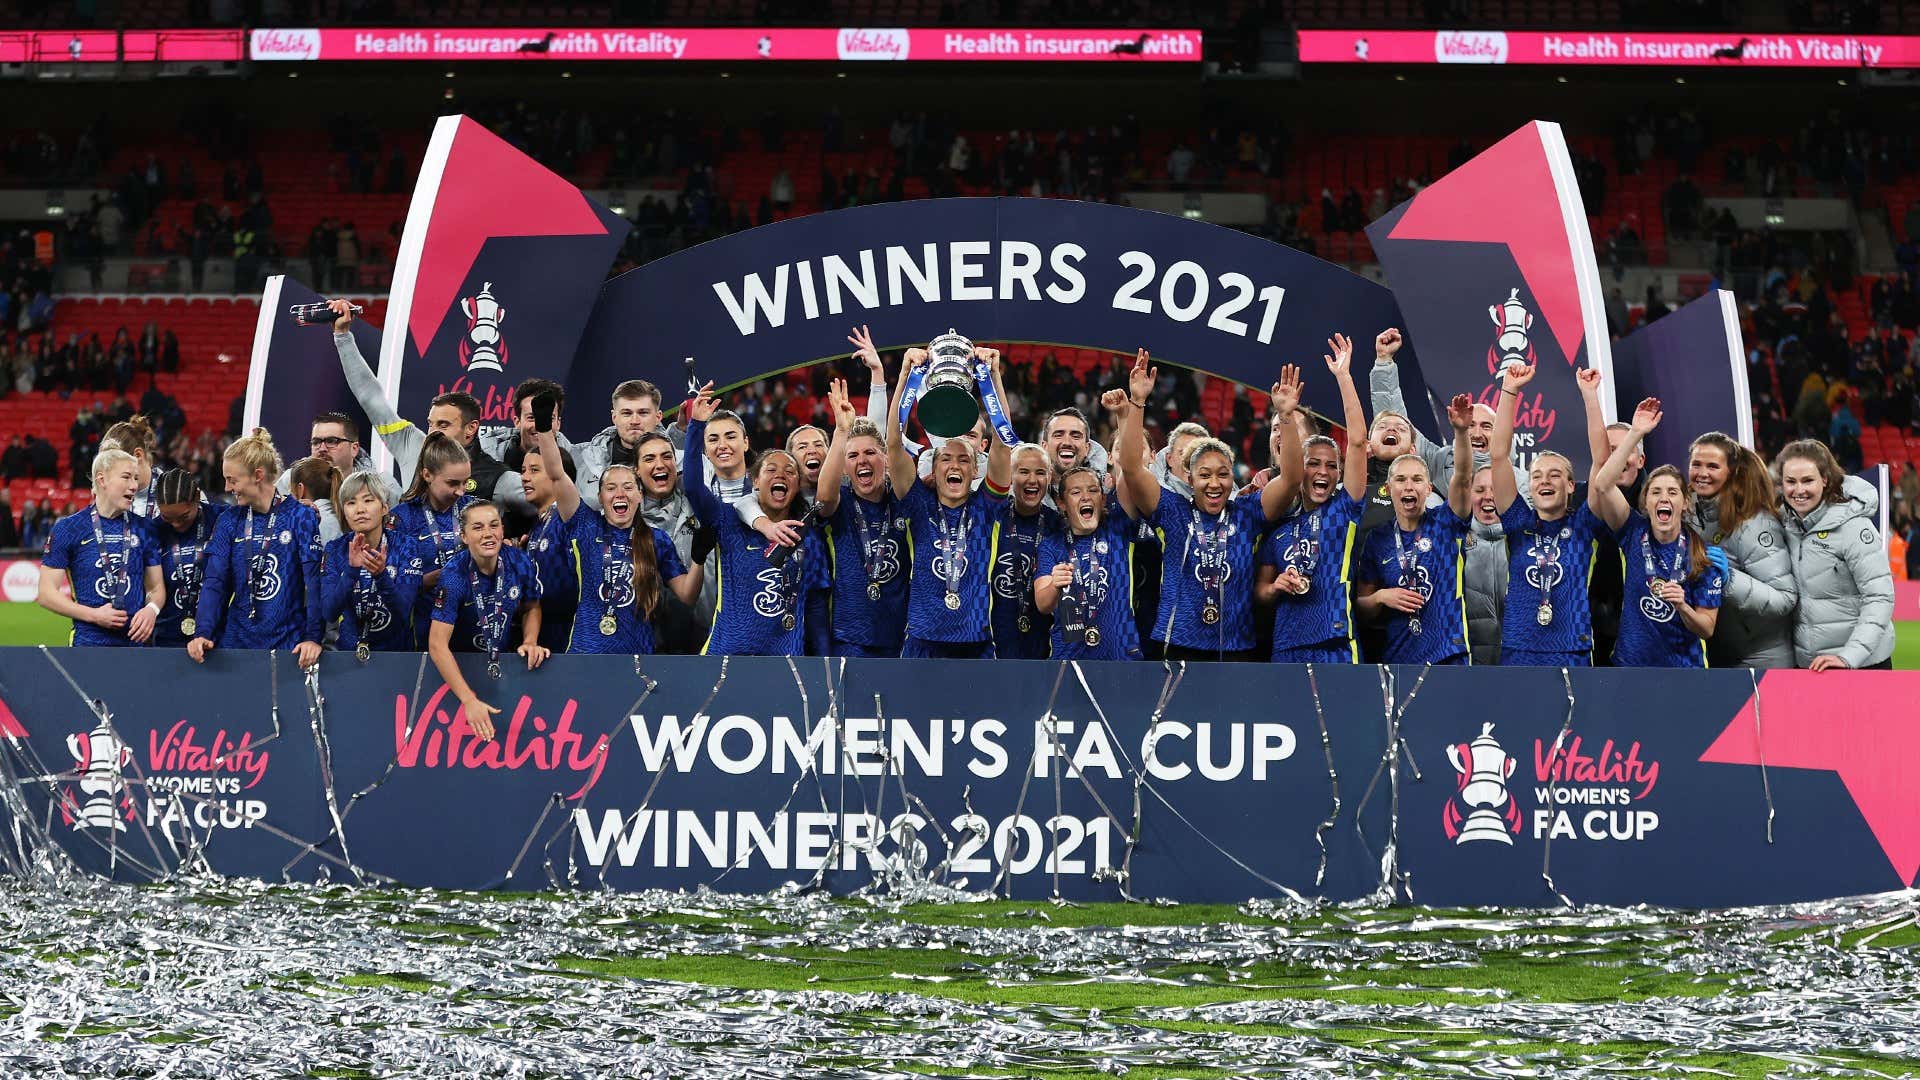 Chelsea FA Women's Cup final vs Arsenal 2020-21 celebrate